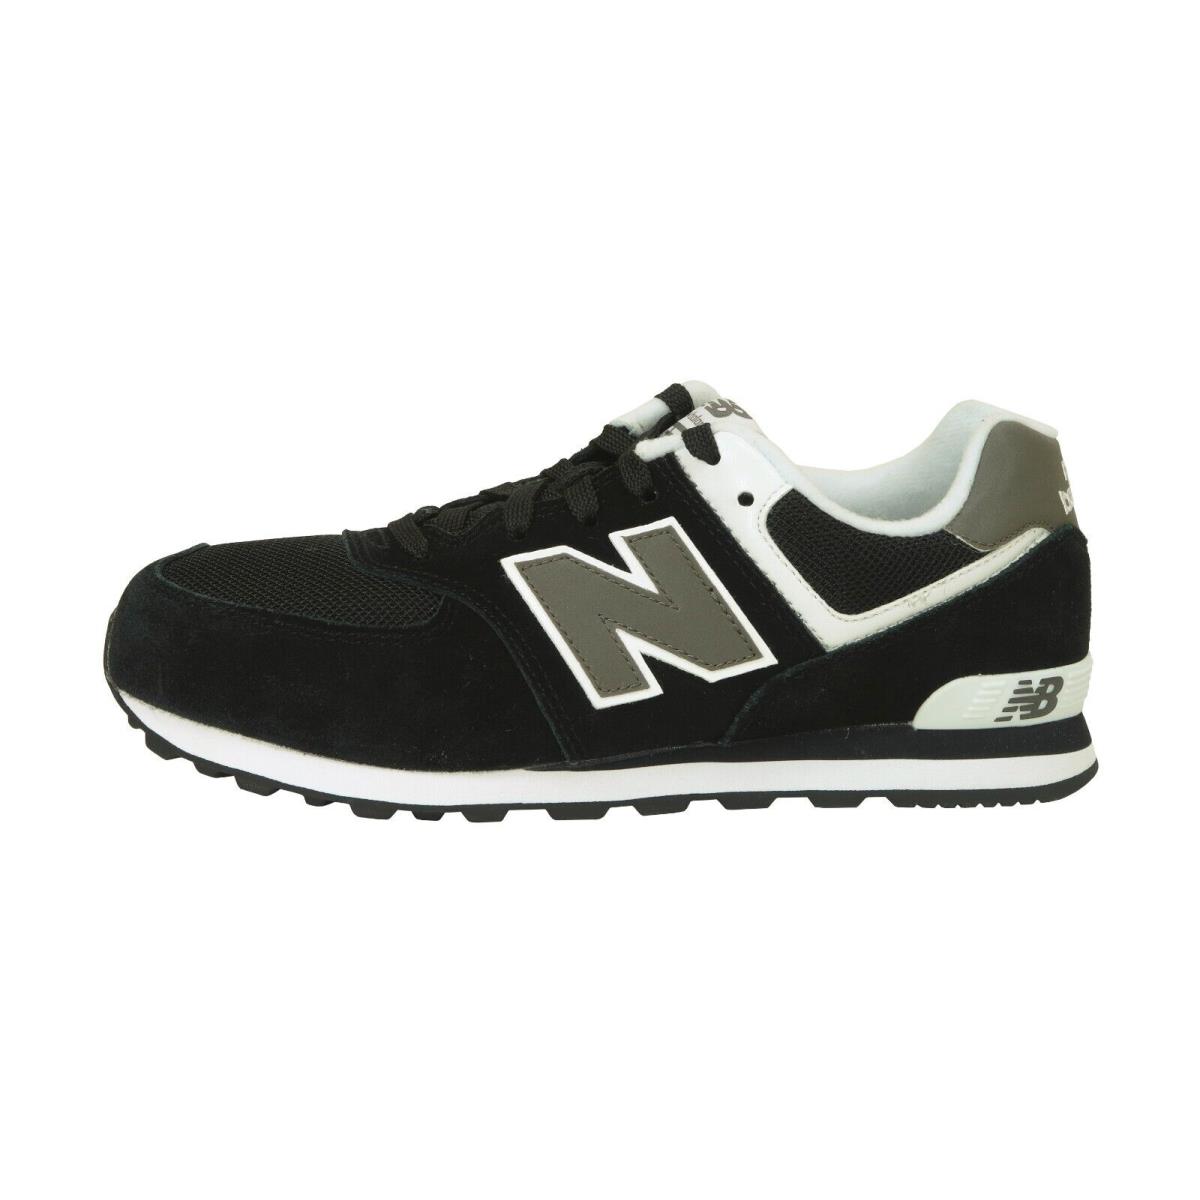 New Balance 574 Big Kids Running Shoes Sneakers KL574SKG - Black/grey - Black